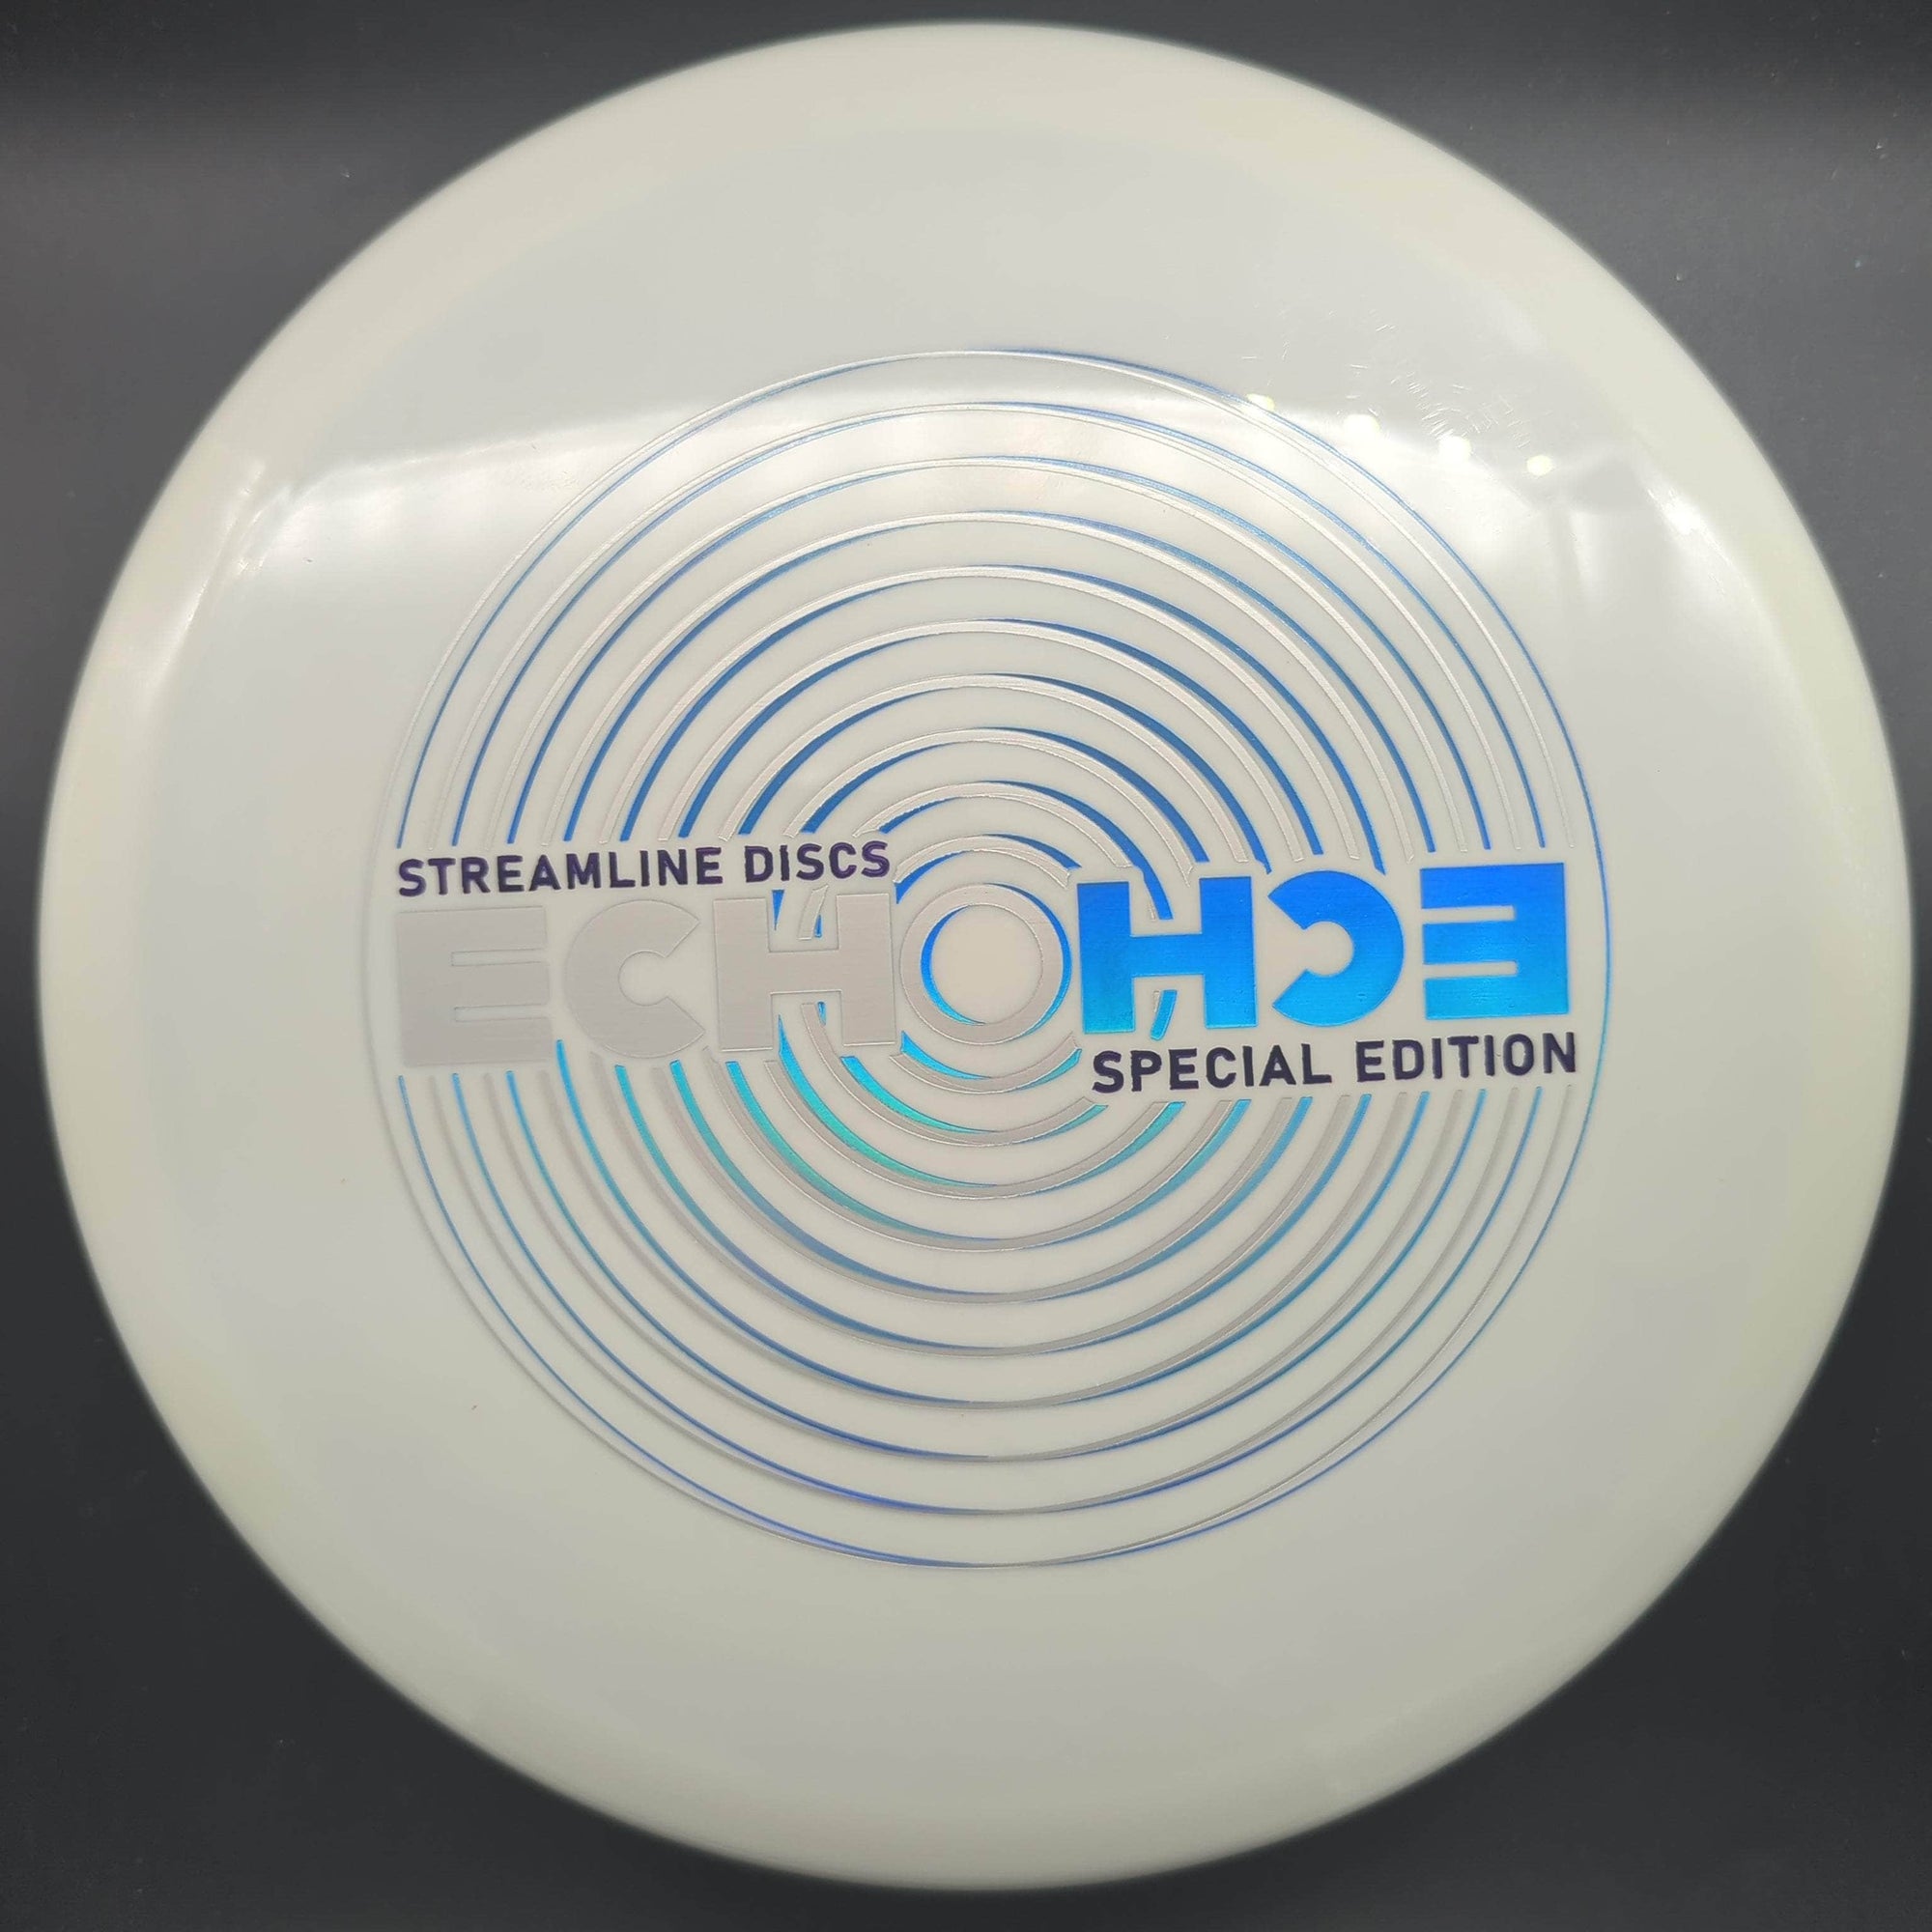 Streamline Mid Range White Purple/Silver/Blue Stamp 168g Echo, Neutron Plastic, Special Edition